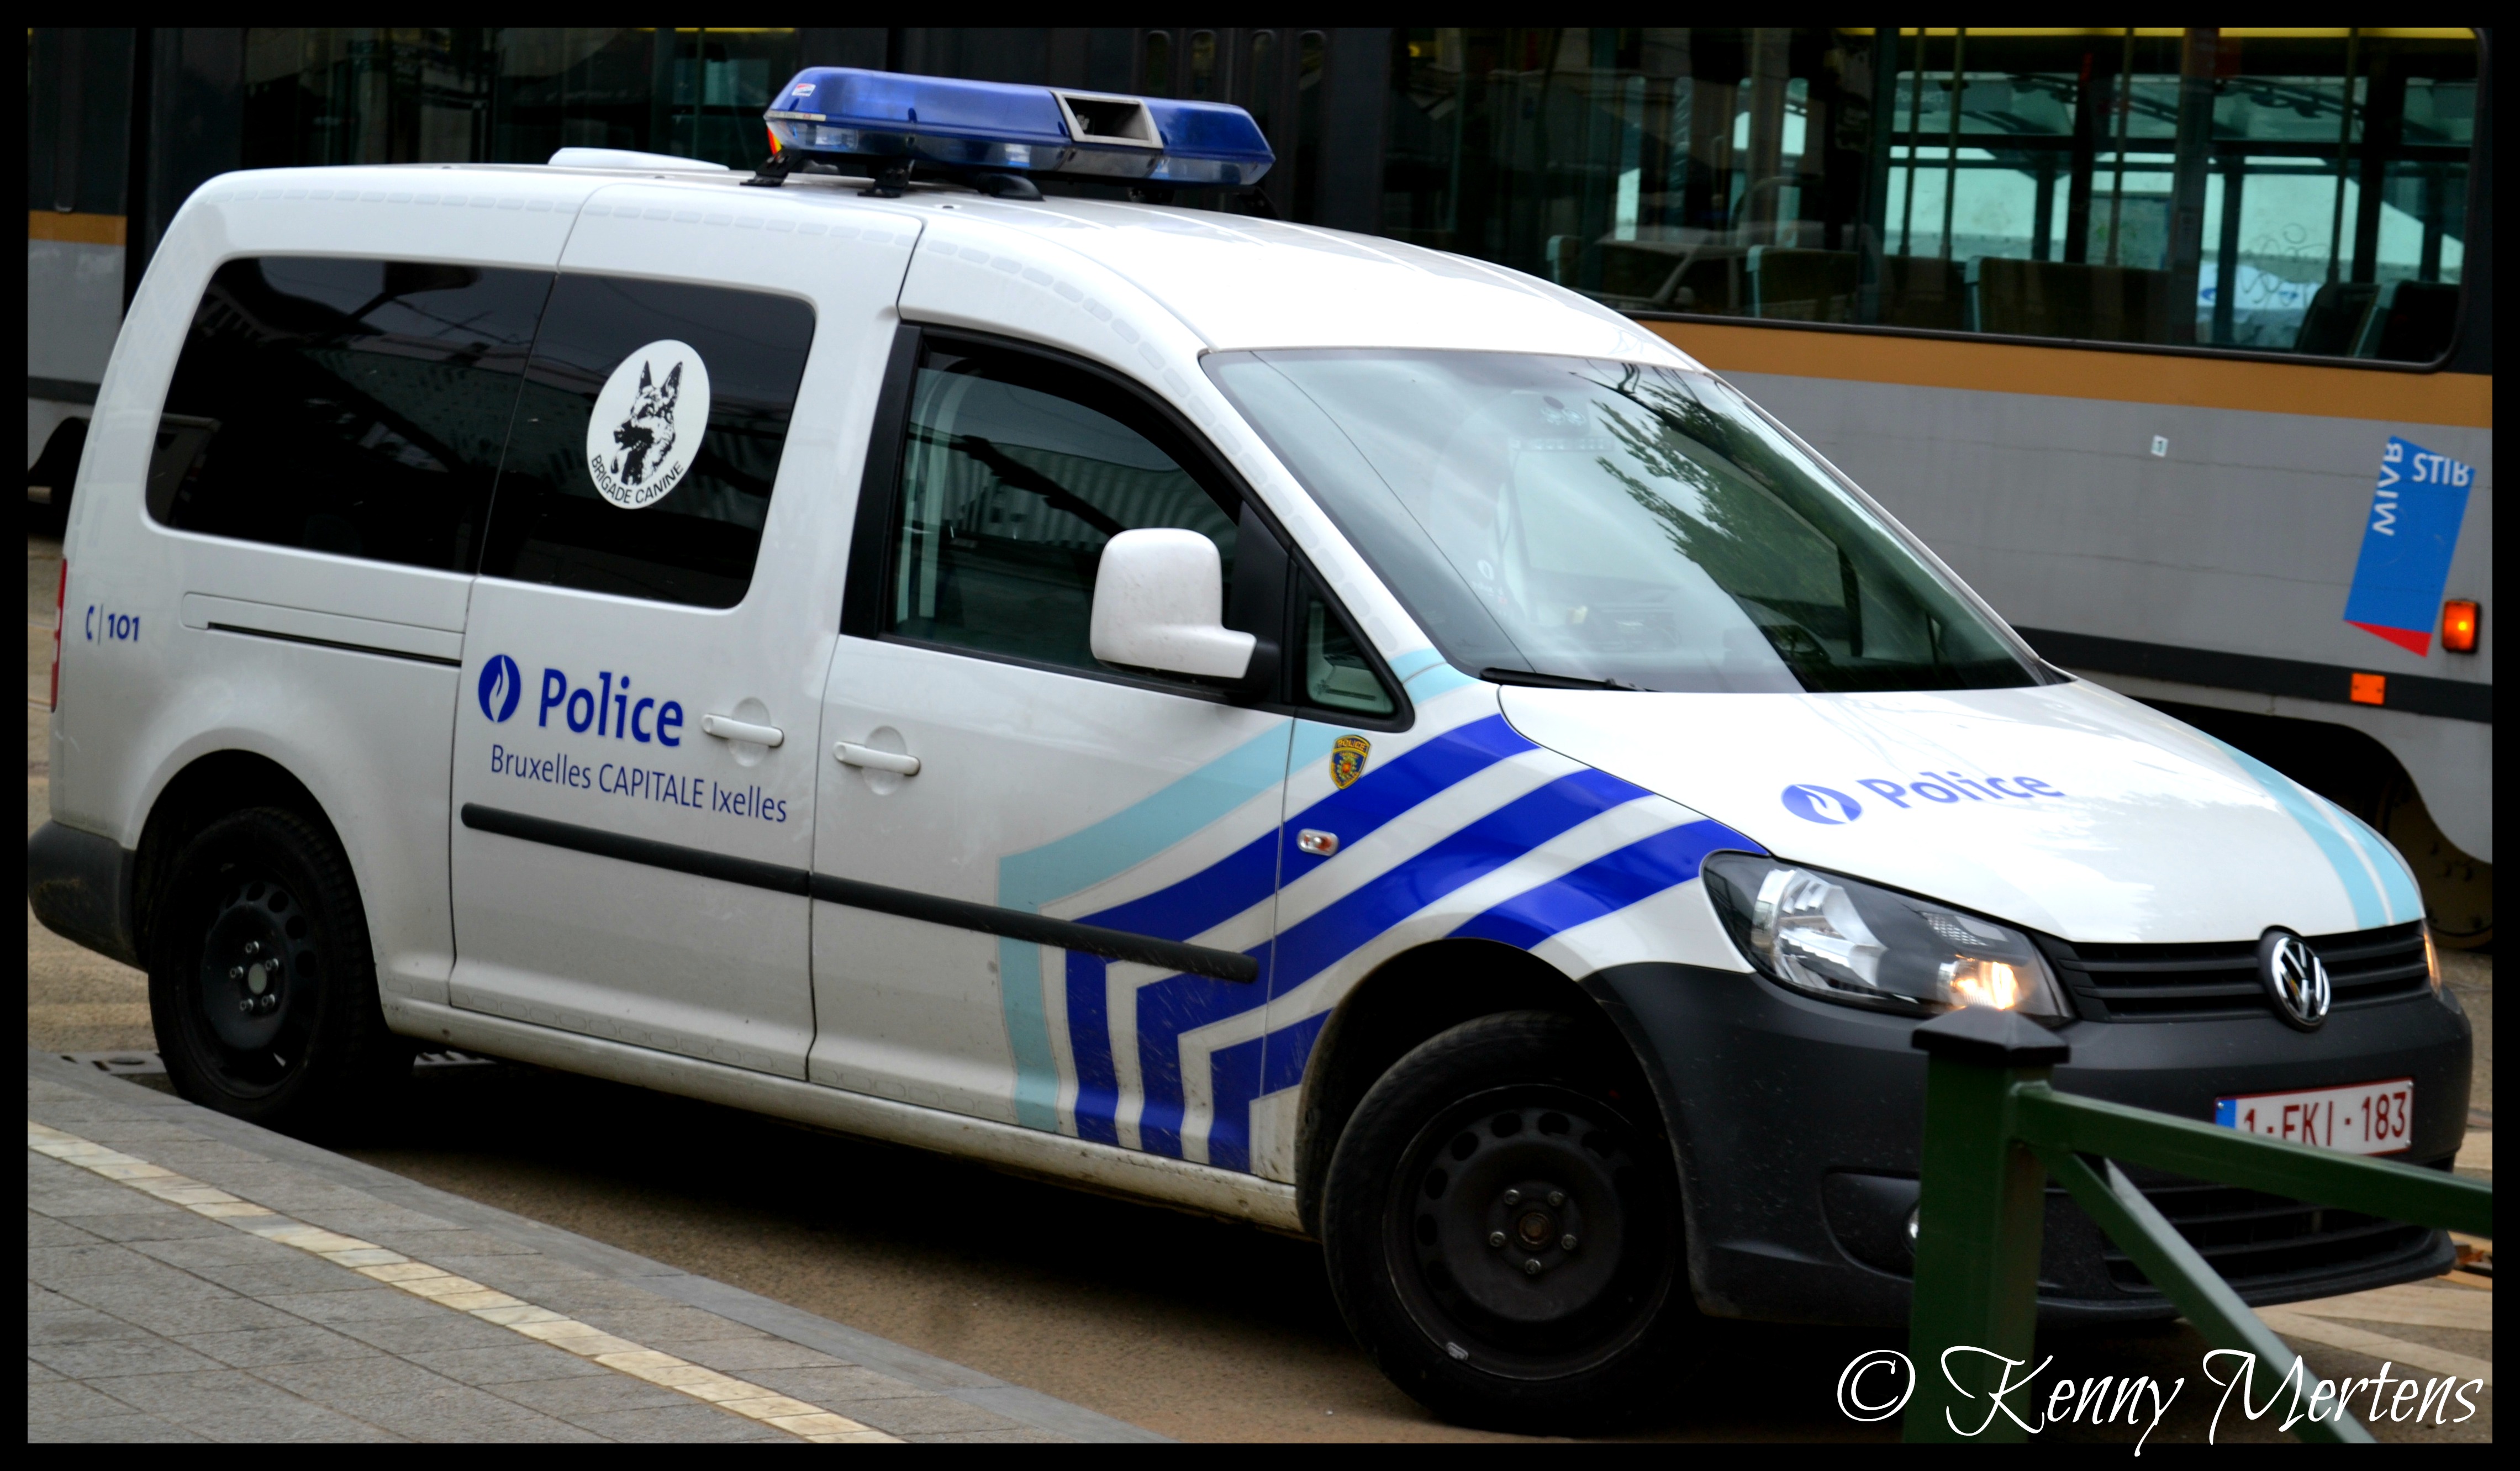 Zone de police Bruxelles Capitale Ixelles (ZP 5339 - PolBru) - Page 3 14807072646_bc9c04fdc3_o